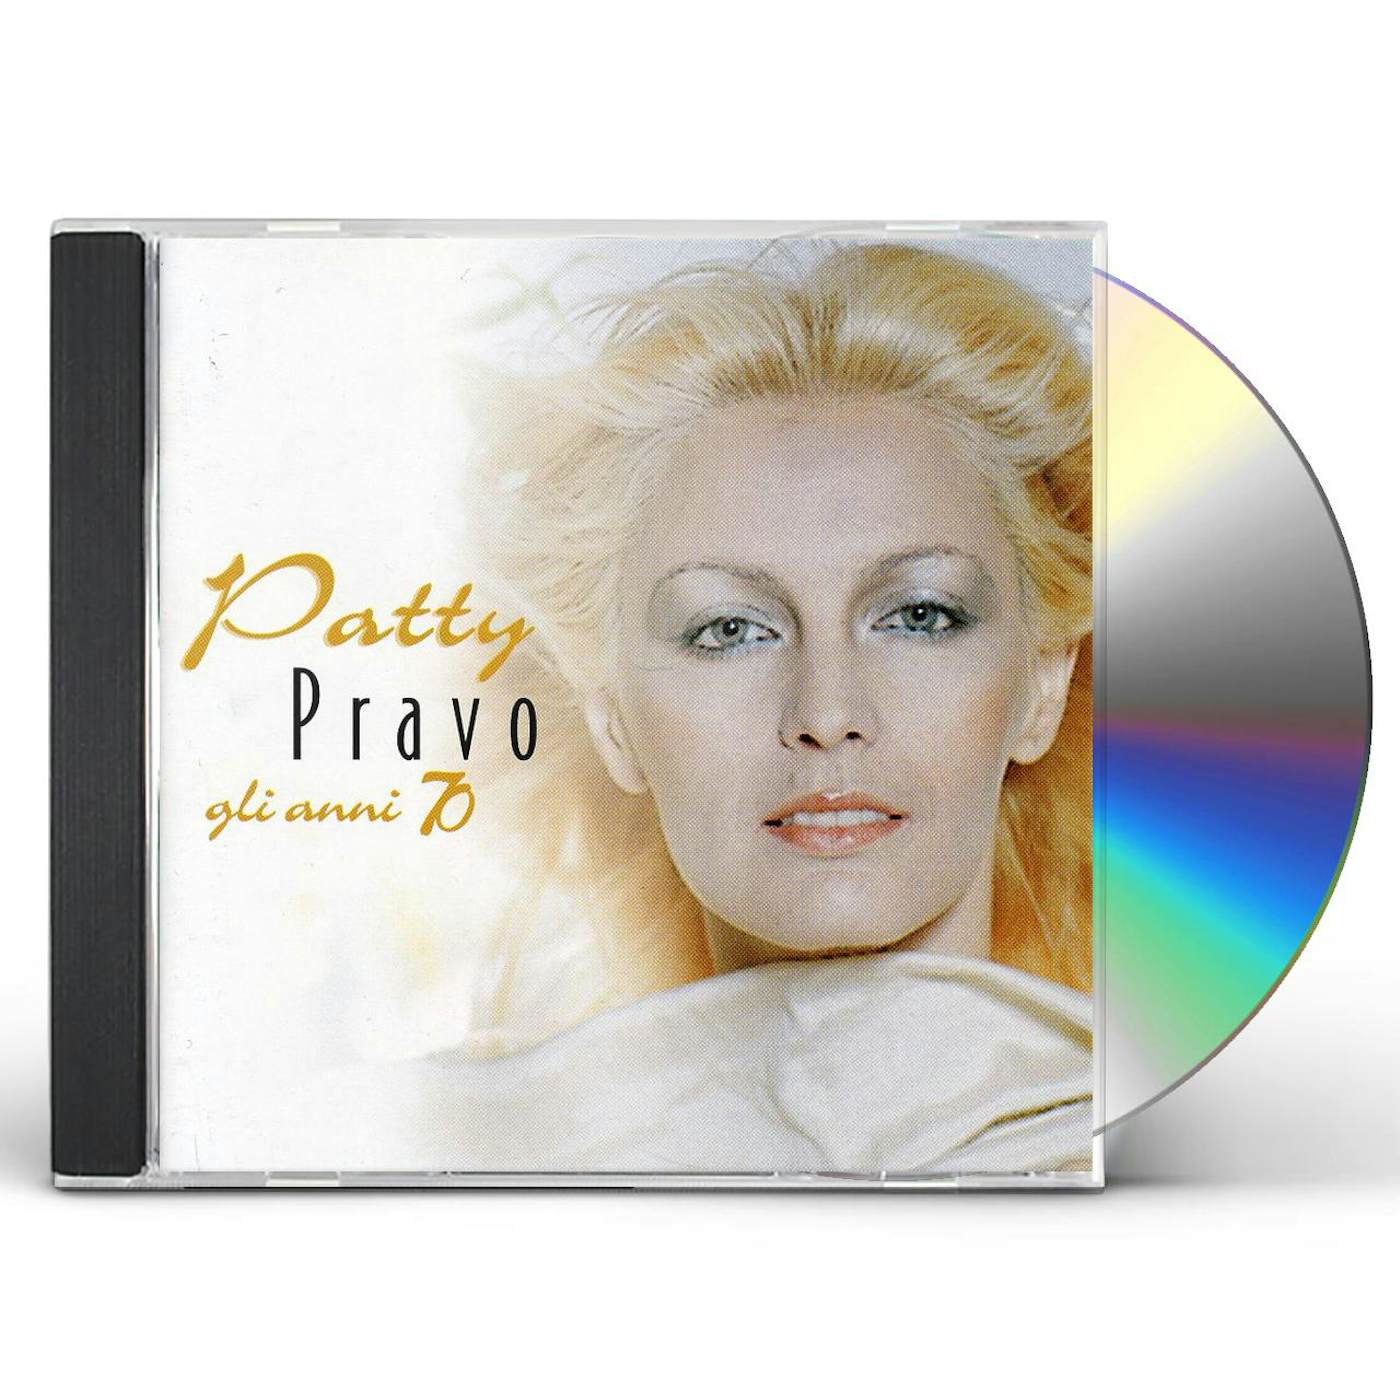 Patty Pravo GLI ANNI 70 CD